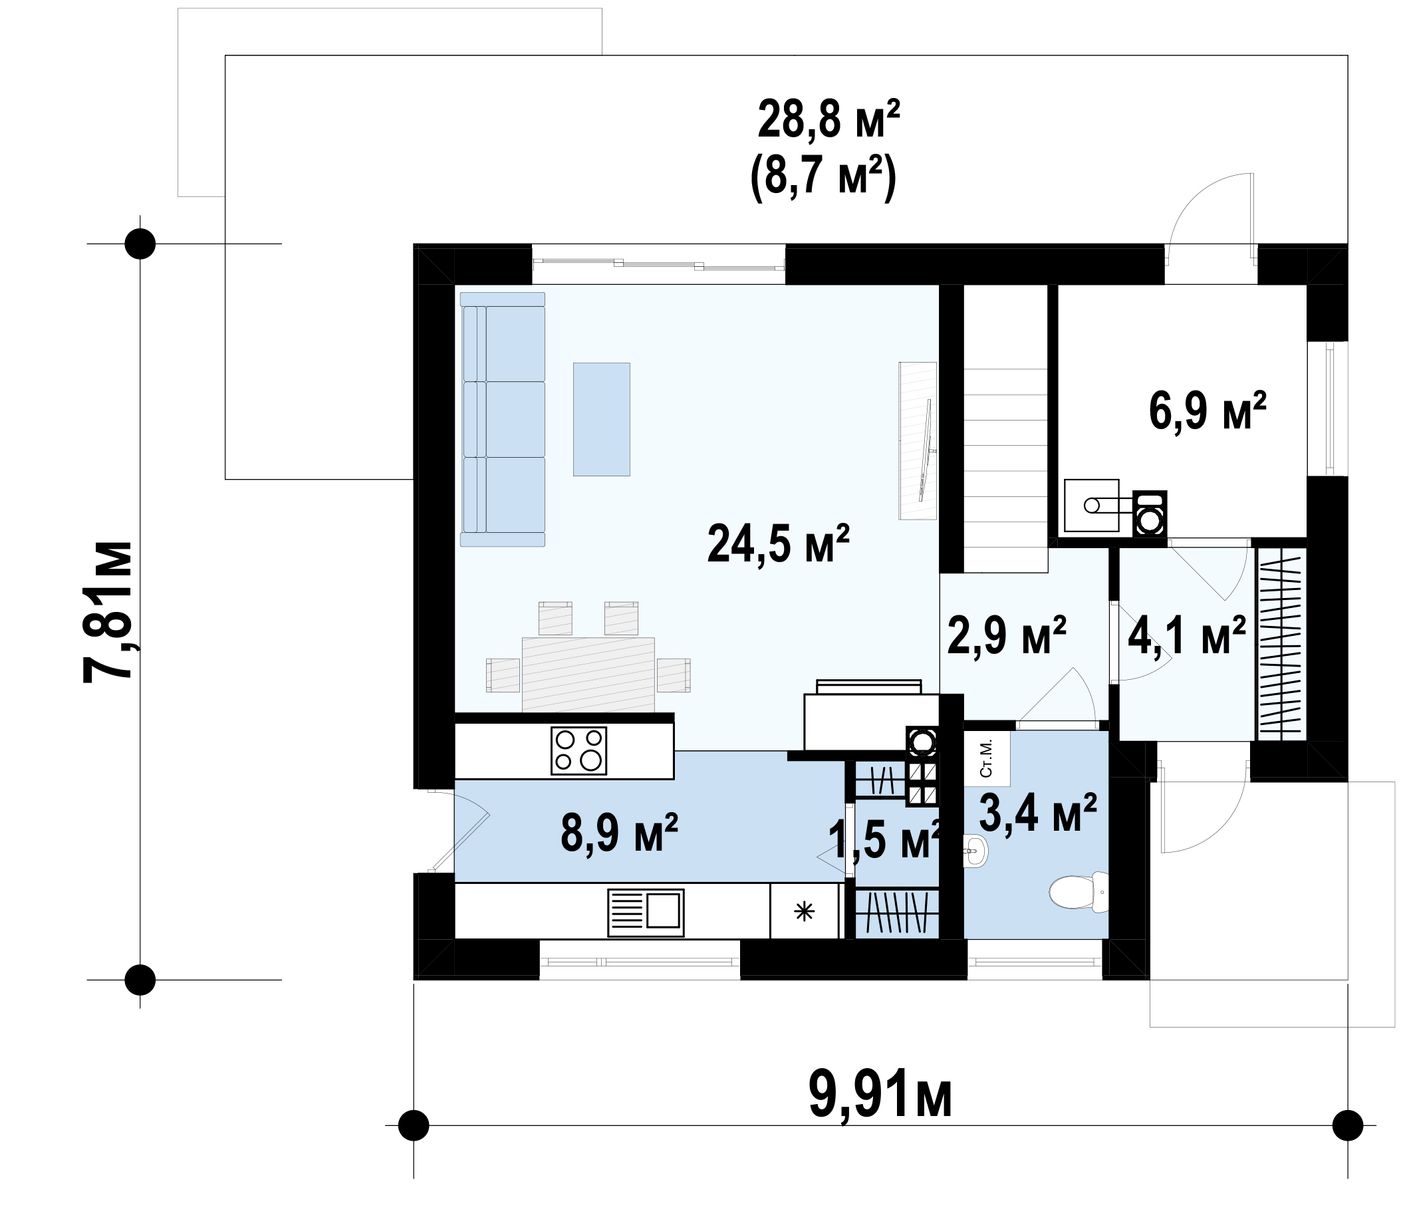 1-ый этаж - план проекта Z229